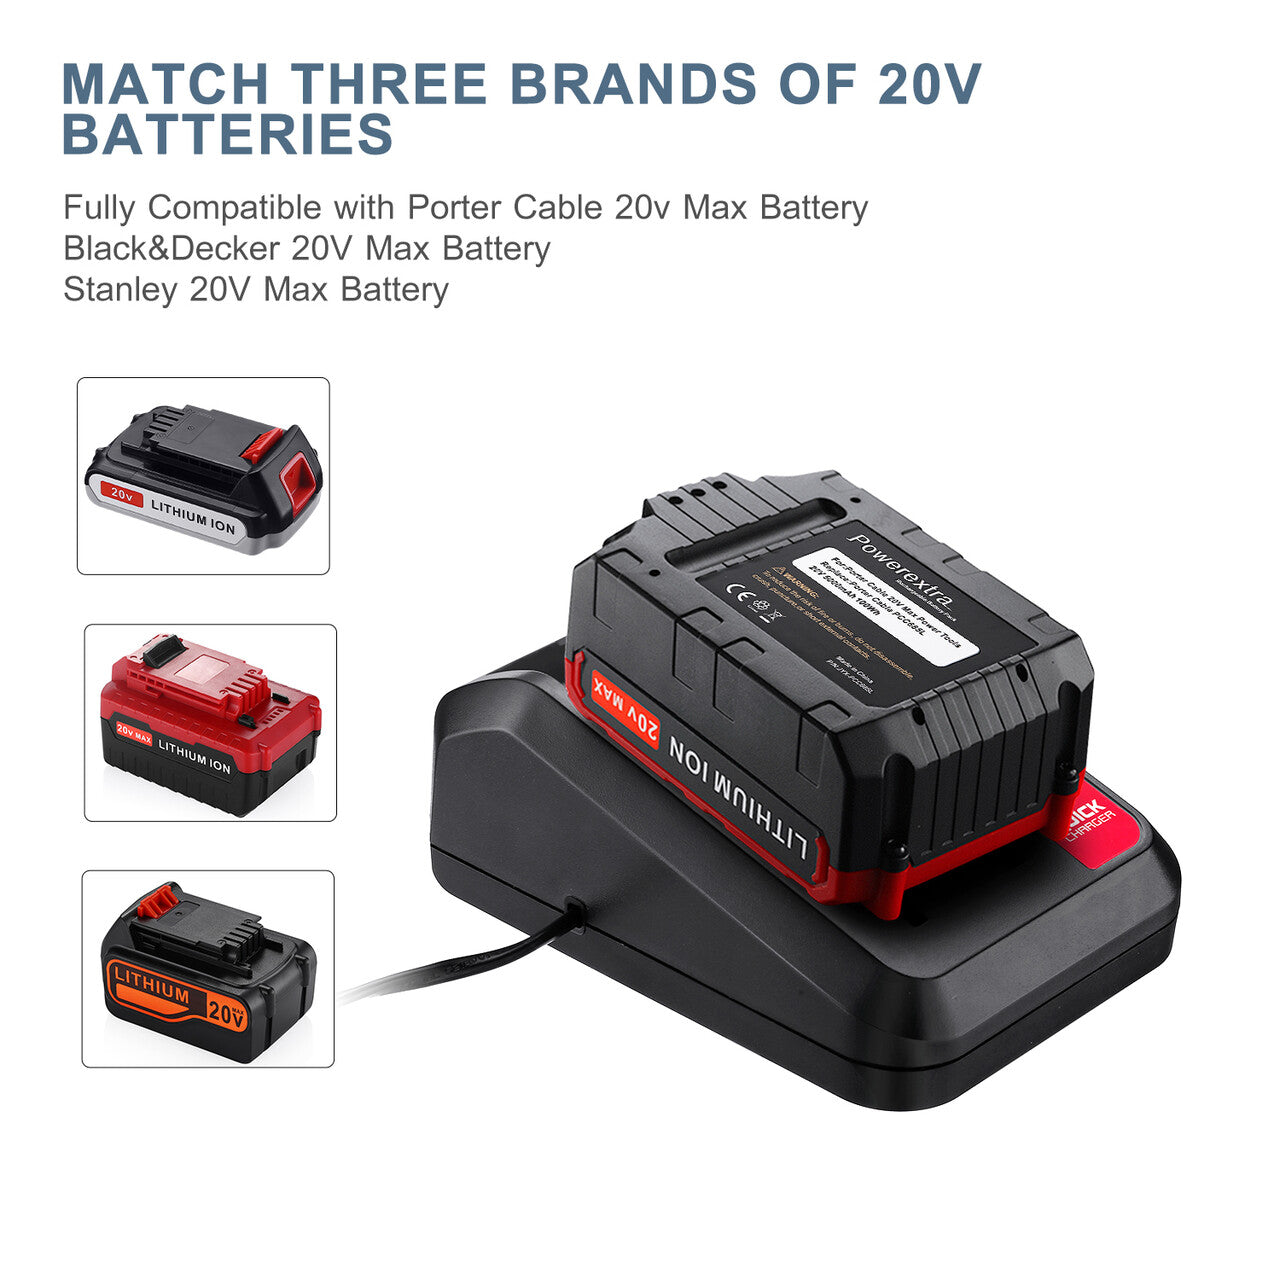 Lcs1620 20V Lithium Battery Charger for Black and Decker Lbxr20 LBX4020 PCC685L US